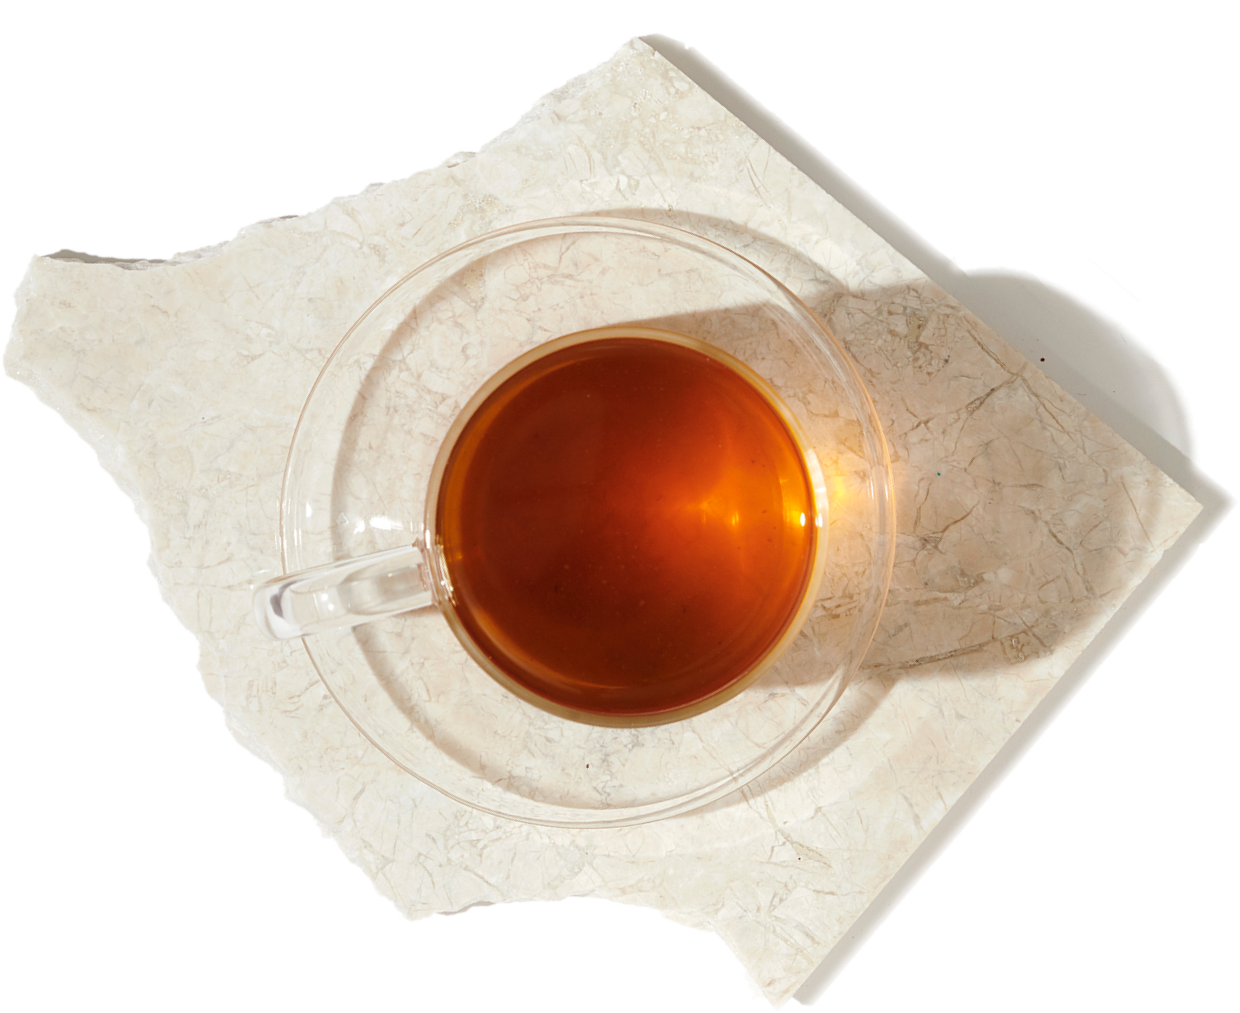 A Nordic mug filled with tea.